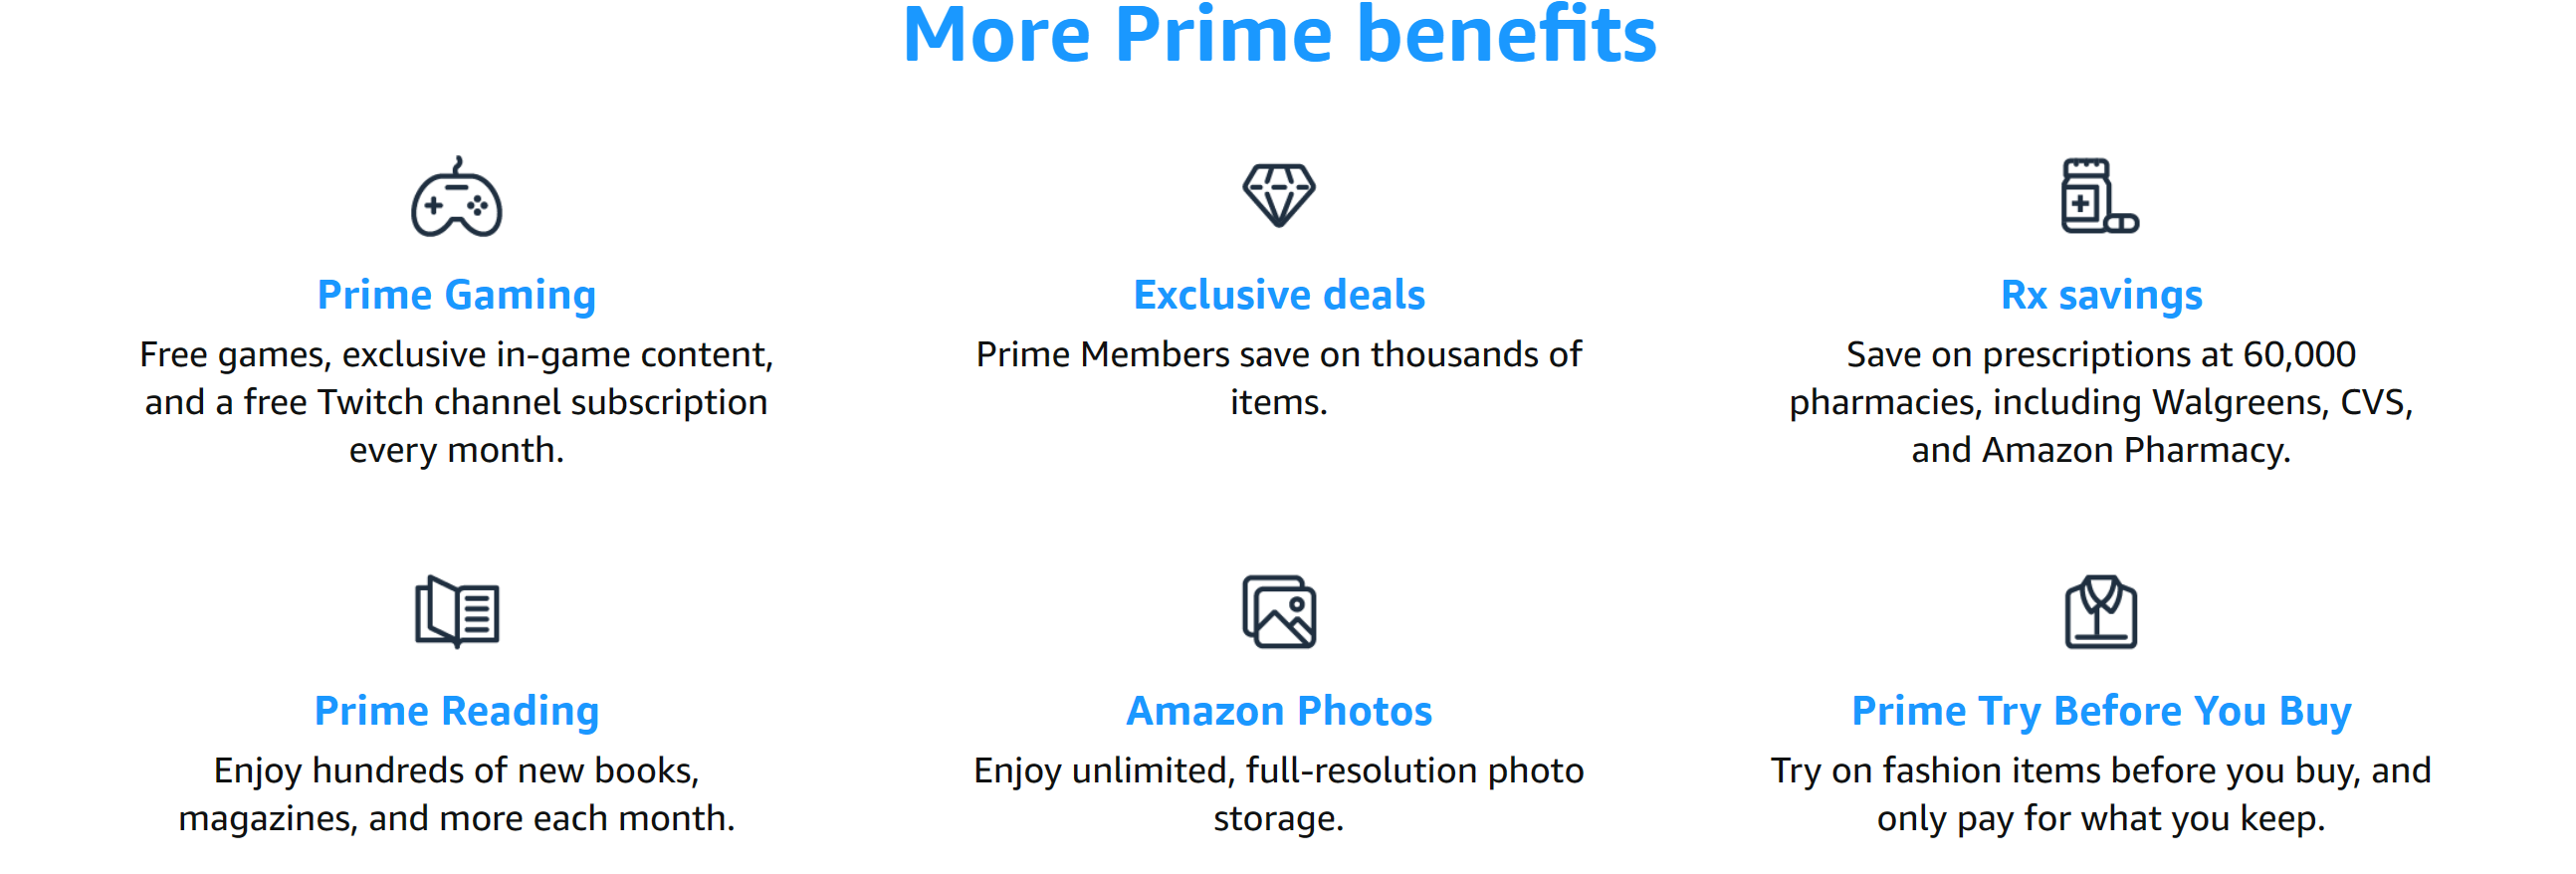 More Prime benefits